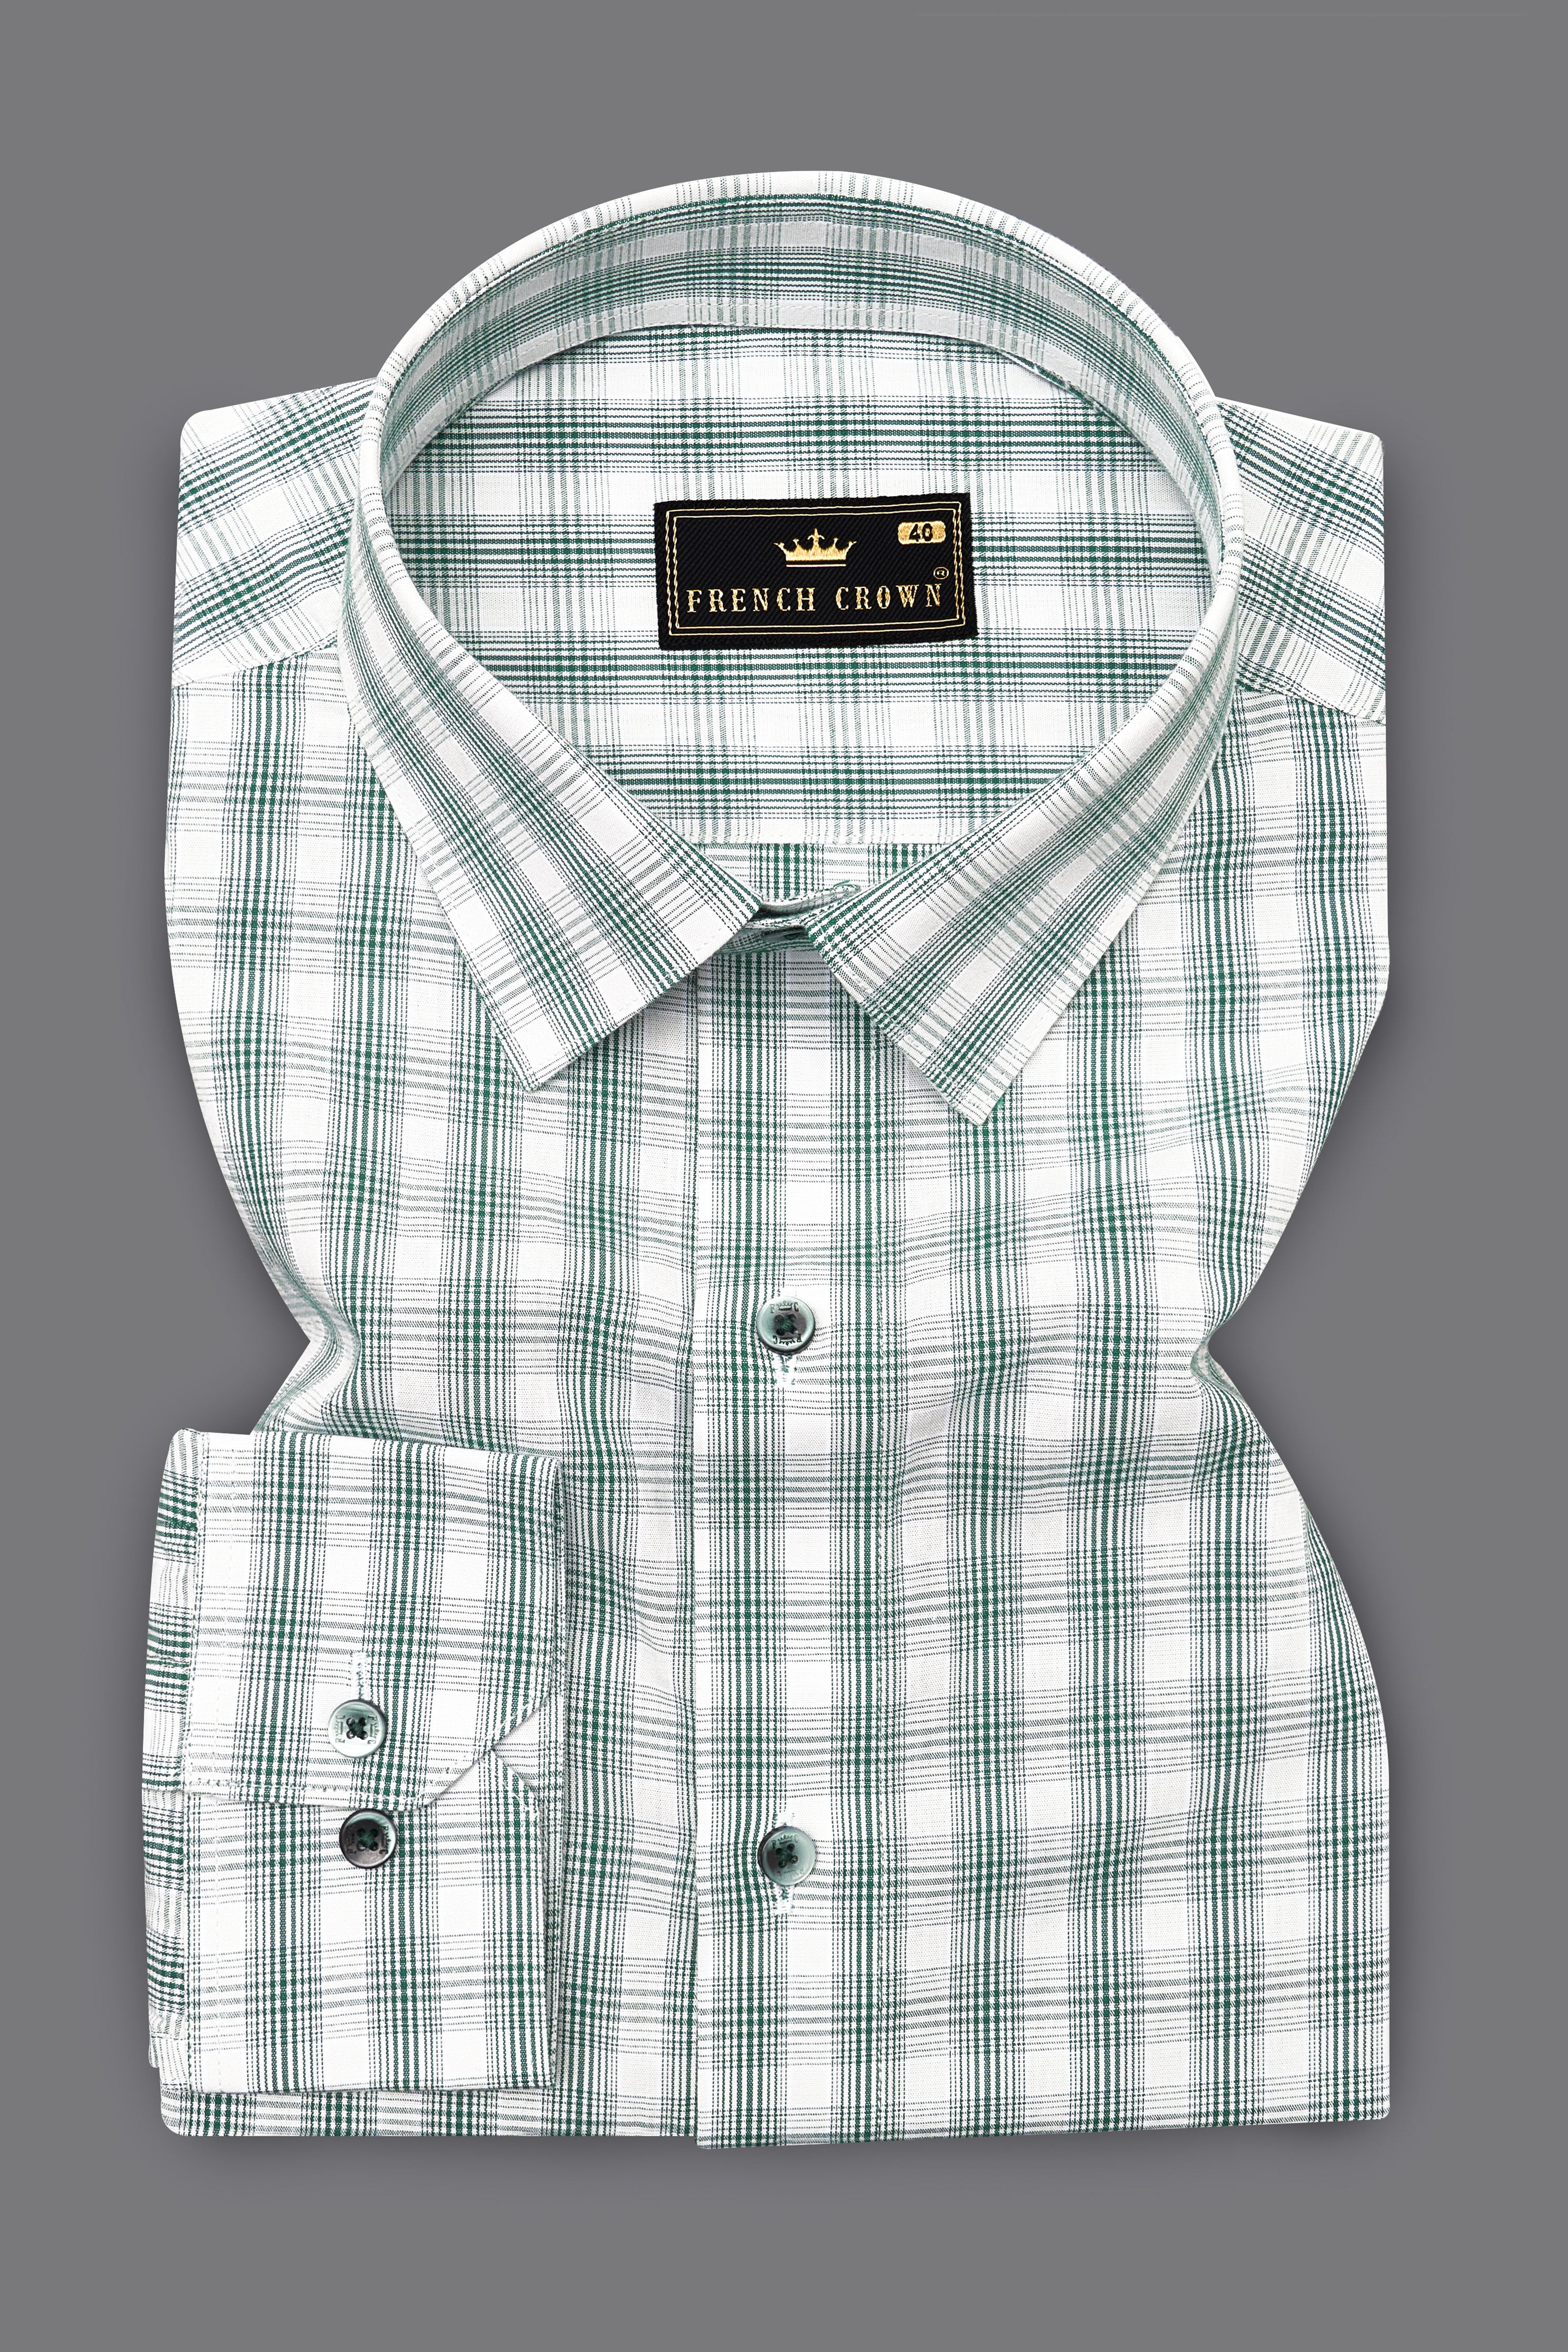 Plantation Green with White Checkered and Tiger Striped Premium Cotton Designer Shirt